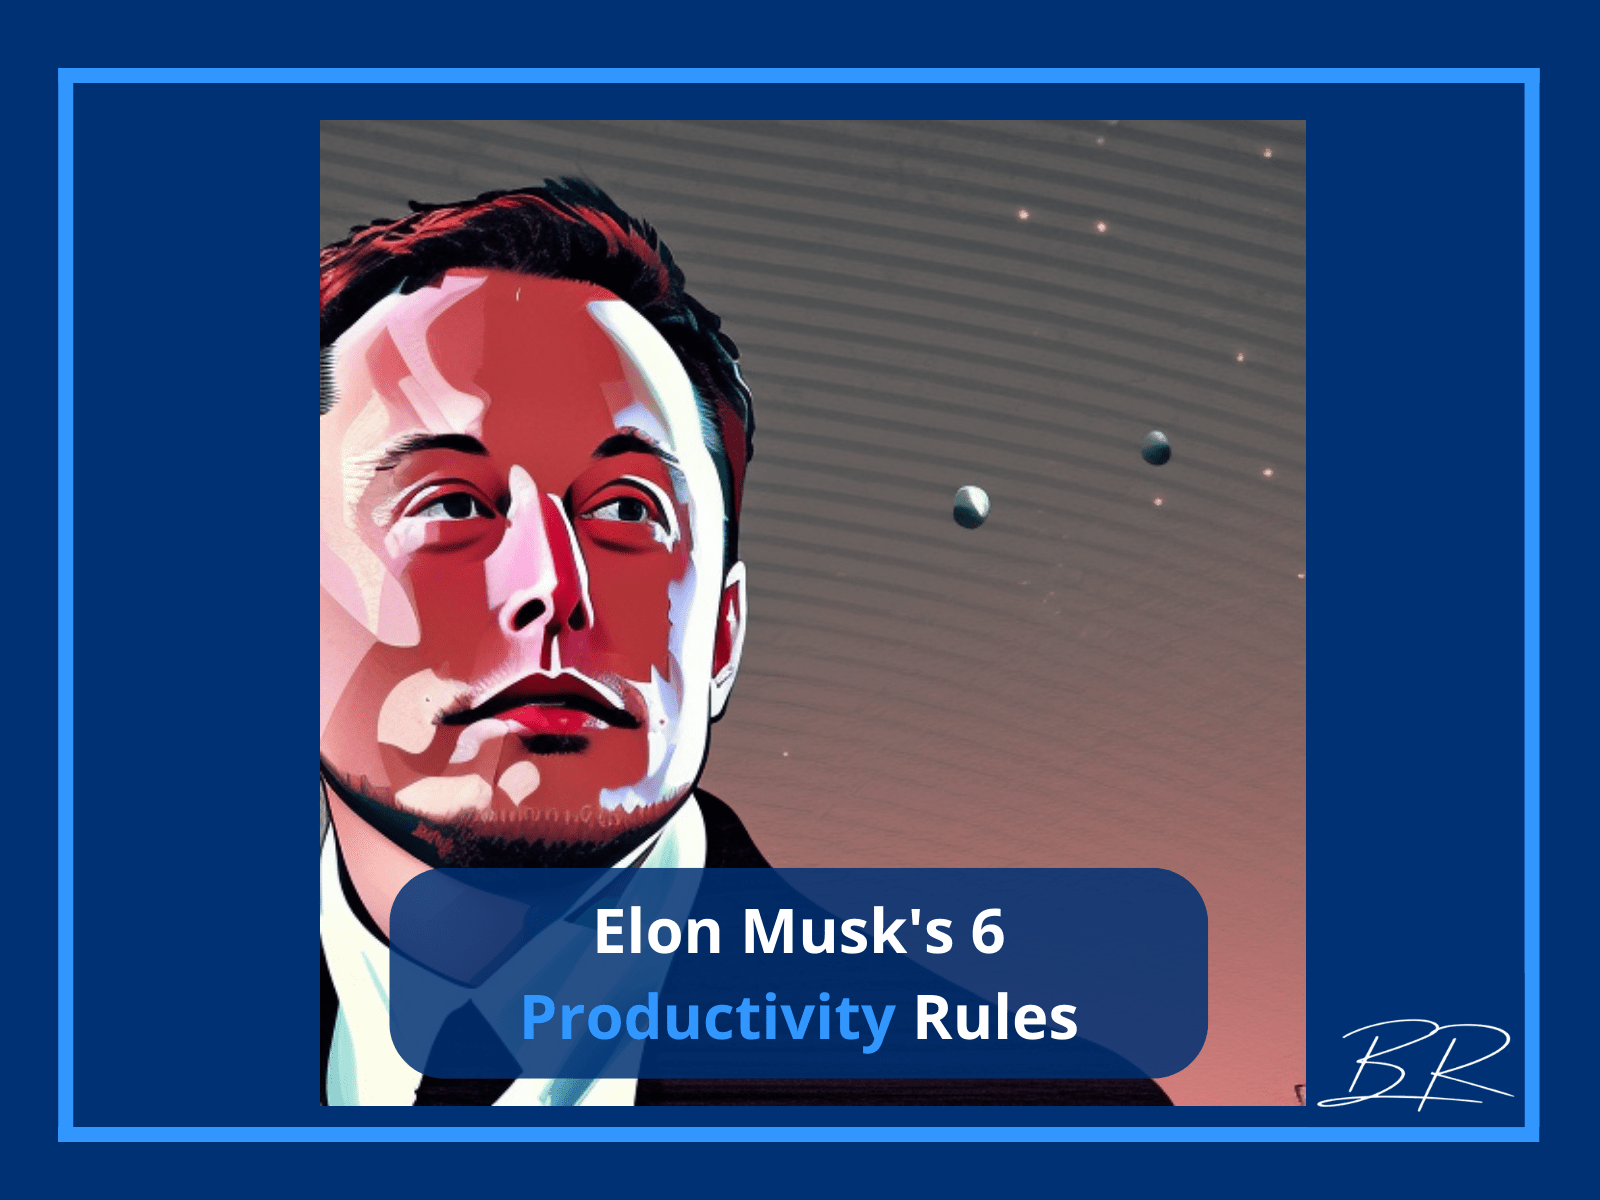 Elon Musk's 6 Productivity Rules